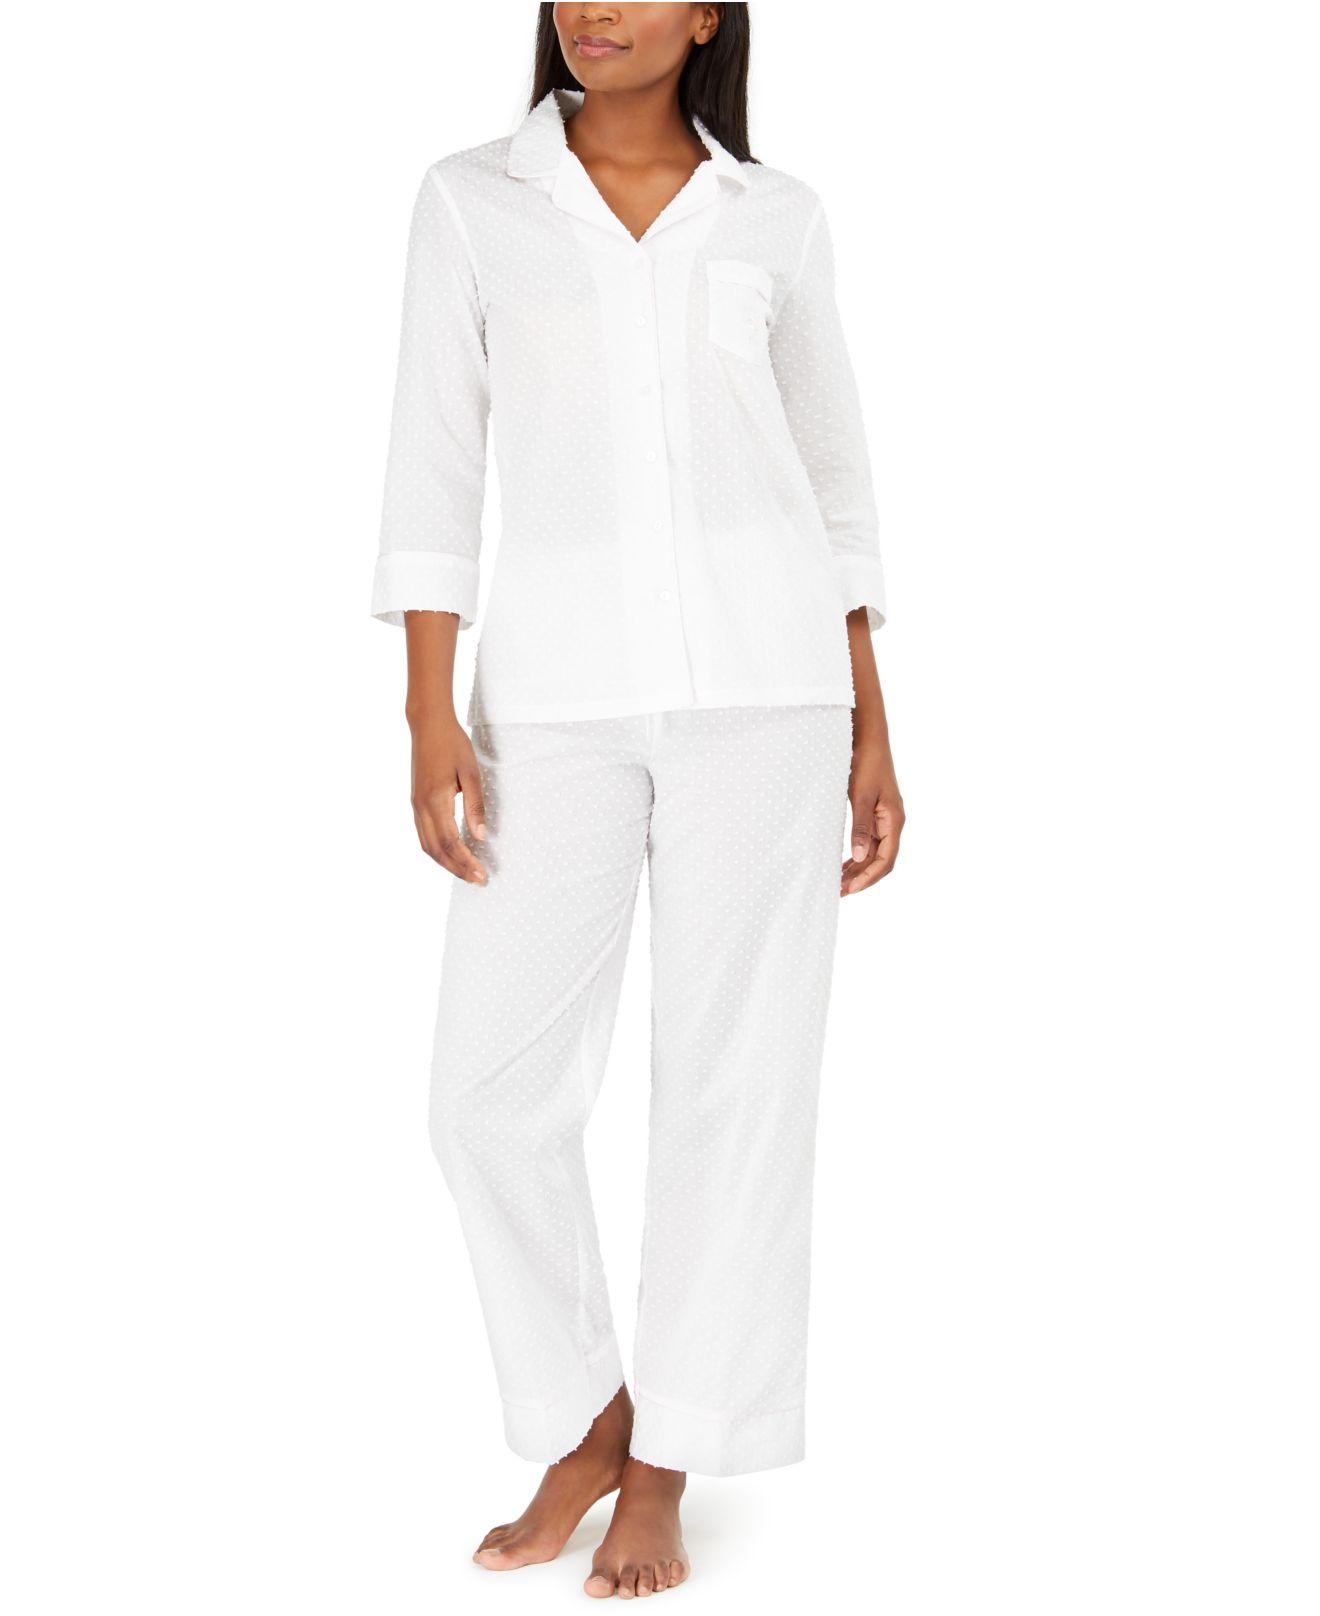 Miss Elaine Cotton Swiss Dot Pajamas Set in White - Lyst